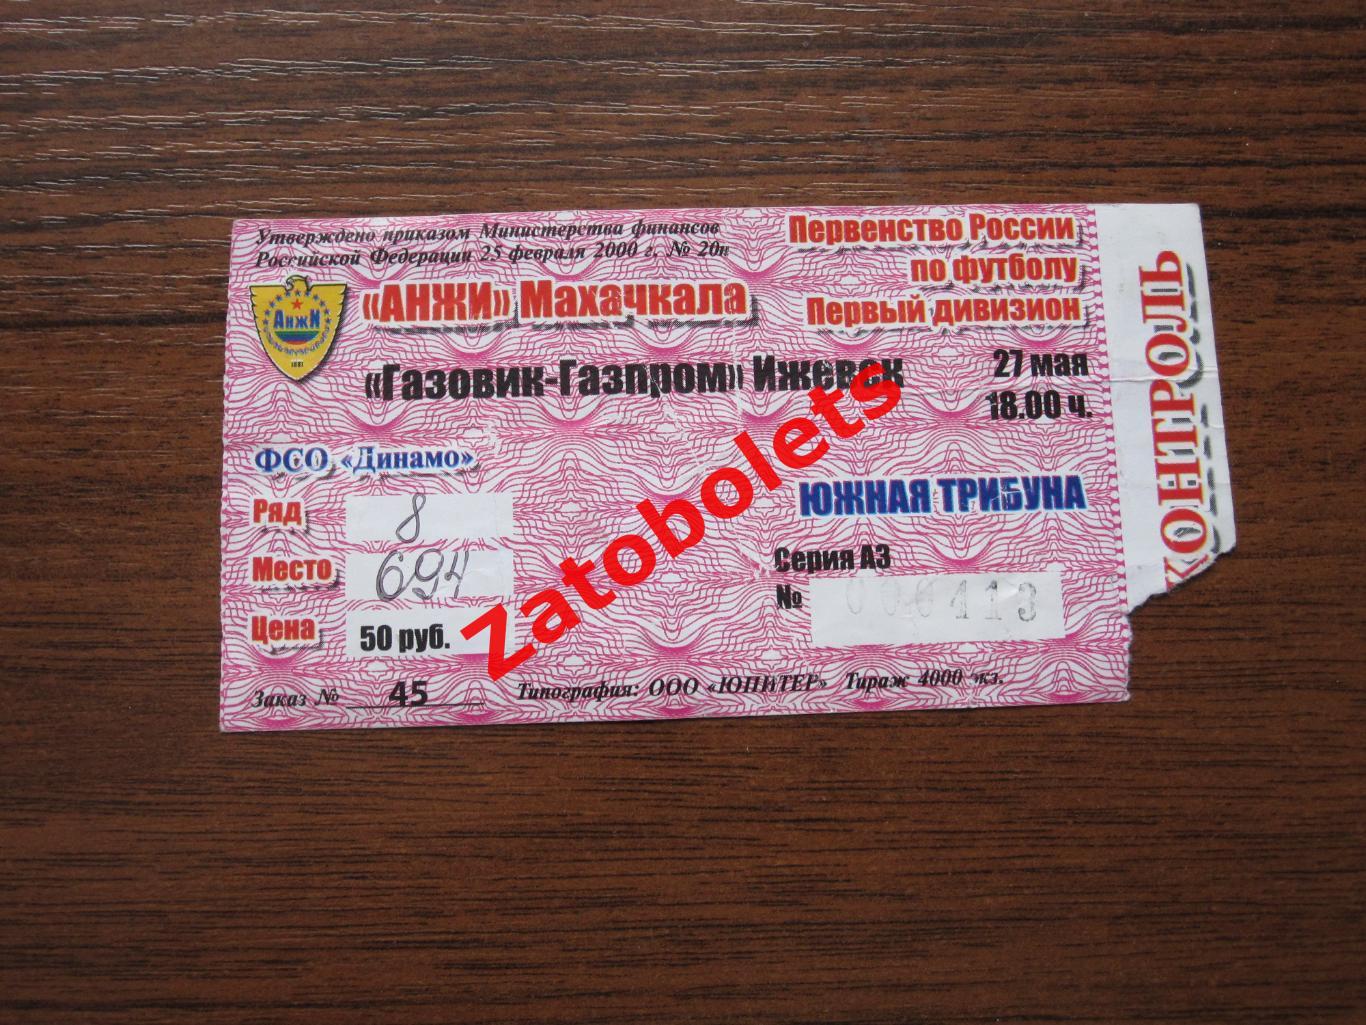 Билет Анжи Махачкала - Газовик-Газпром Ижевск 2003